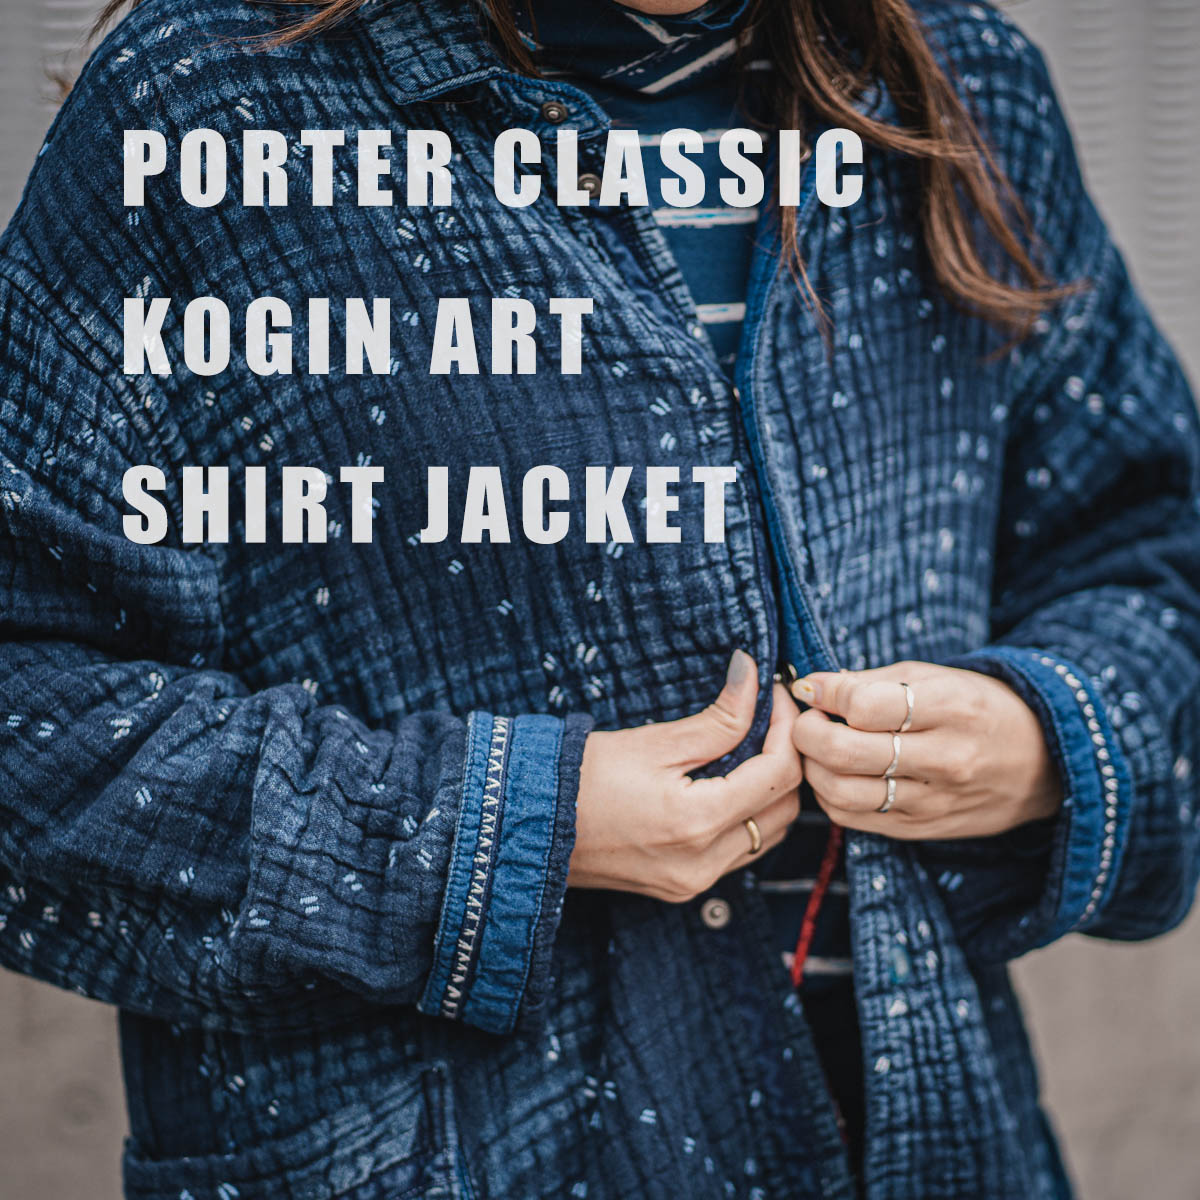 Porter classic KOGIN ART SHIRT JACKET